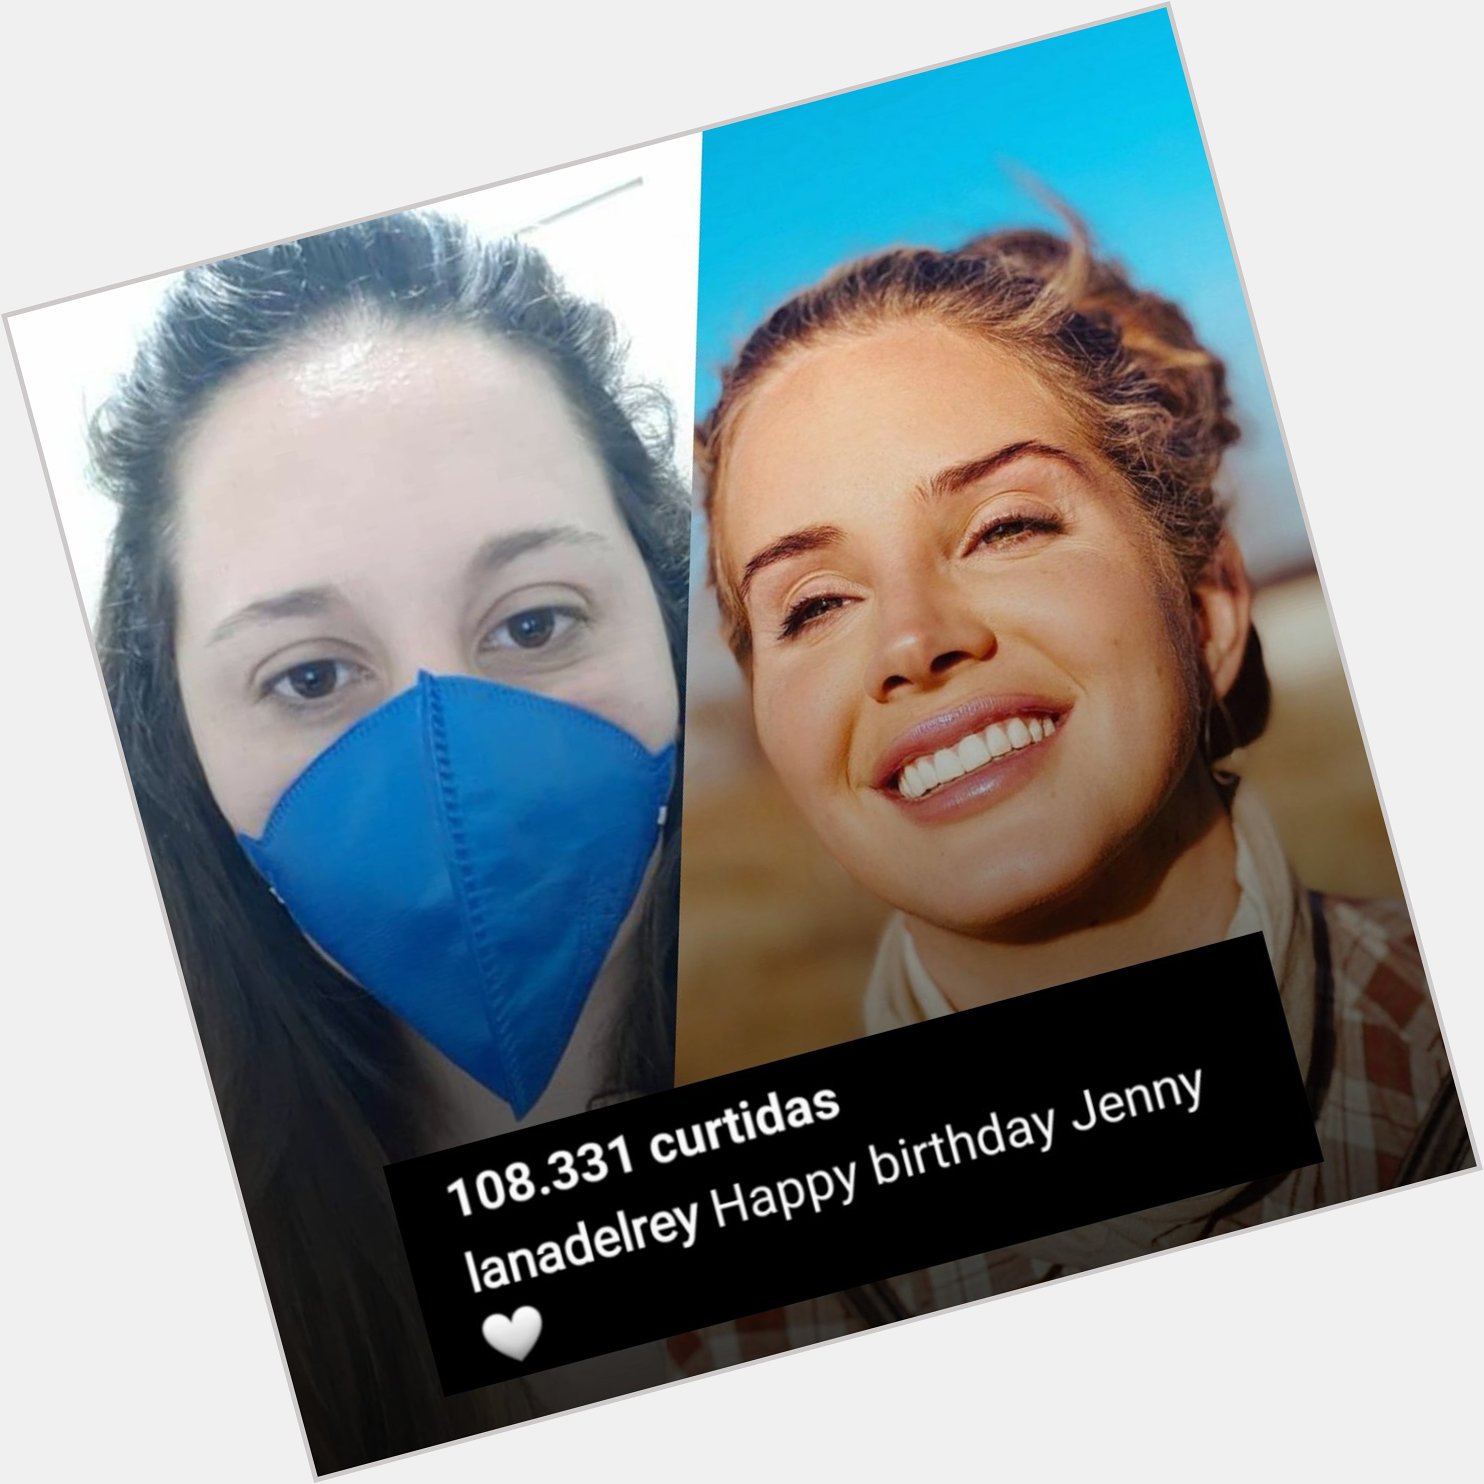 \"Happy birthday Jenny\" Lana Del Rey via instagram. Is not birthday today, Lana got confused. 